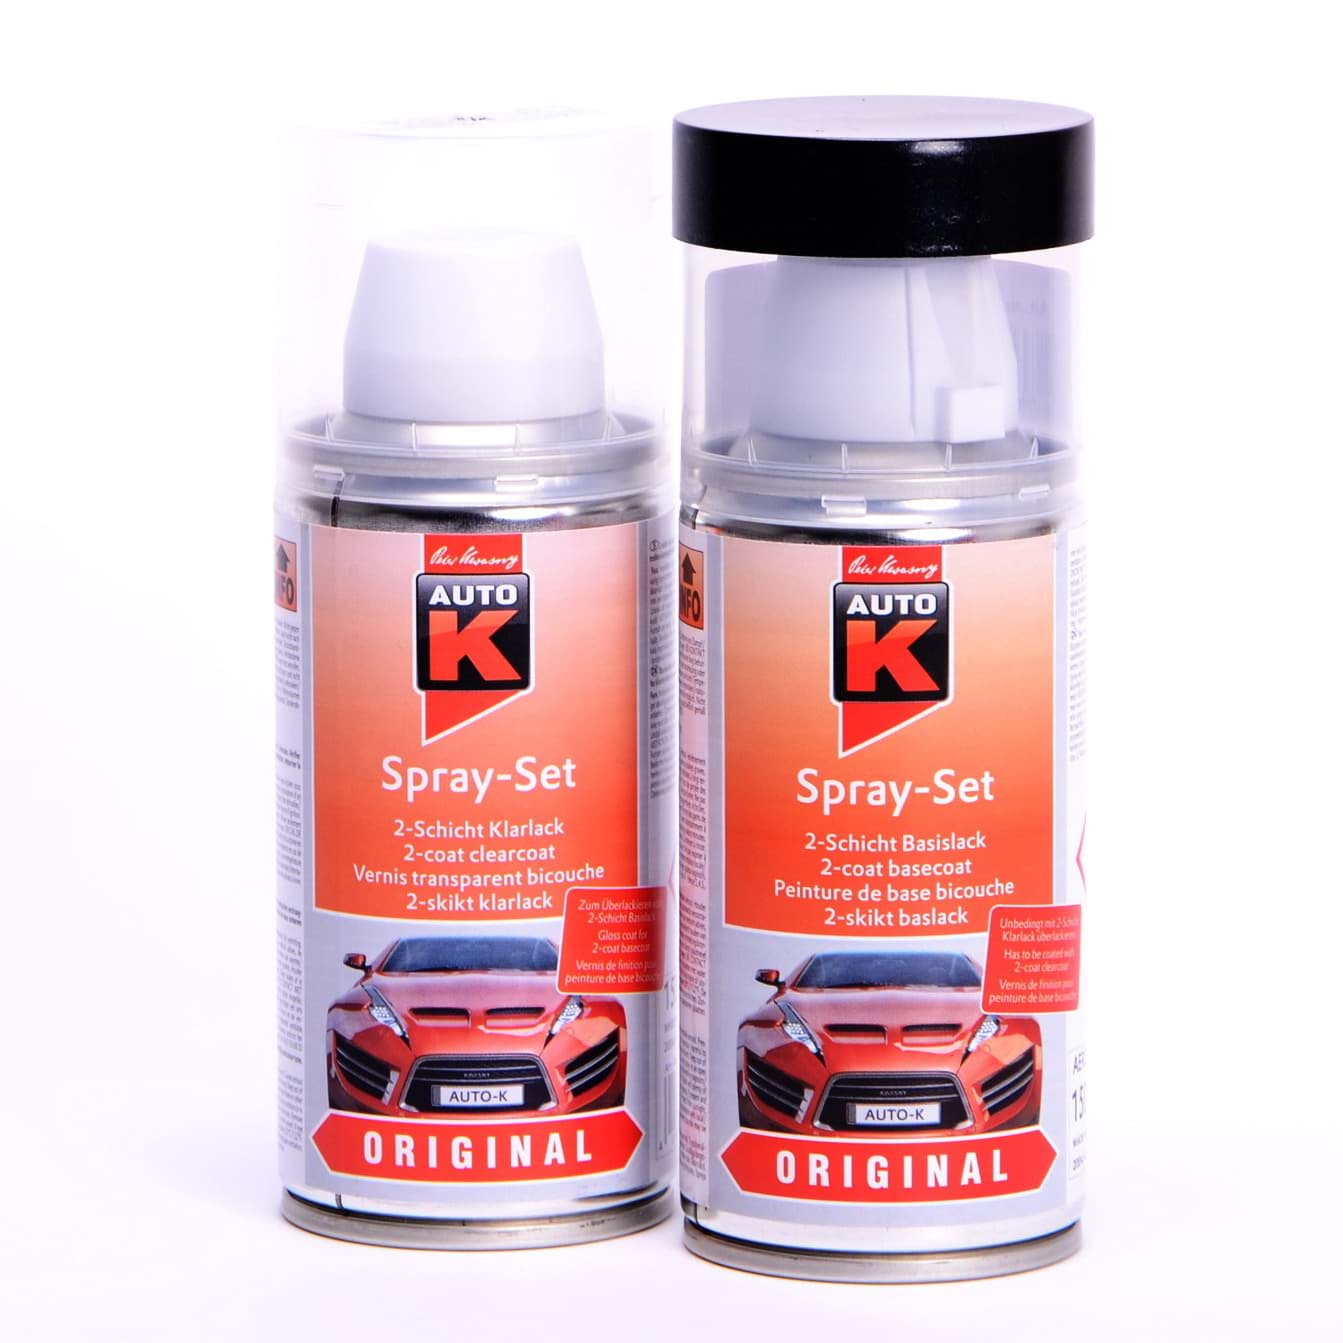 Afbeelding van Auto-K Spray-Set Autolack für Mercedes 775 Iridiumsilber met 23344